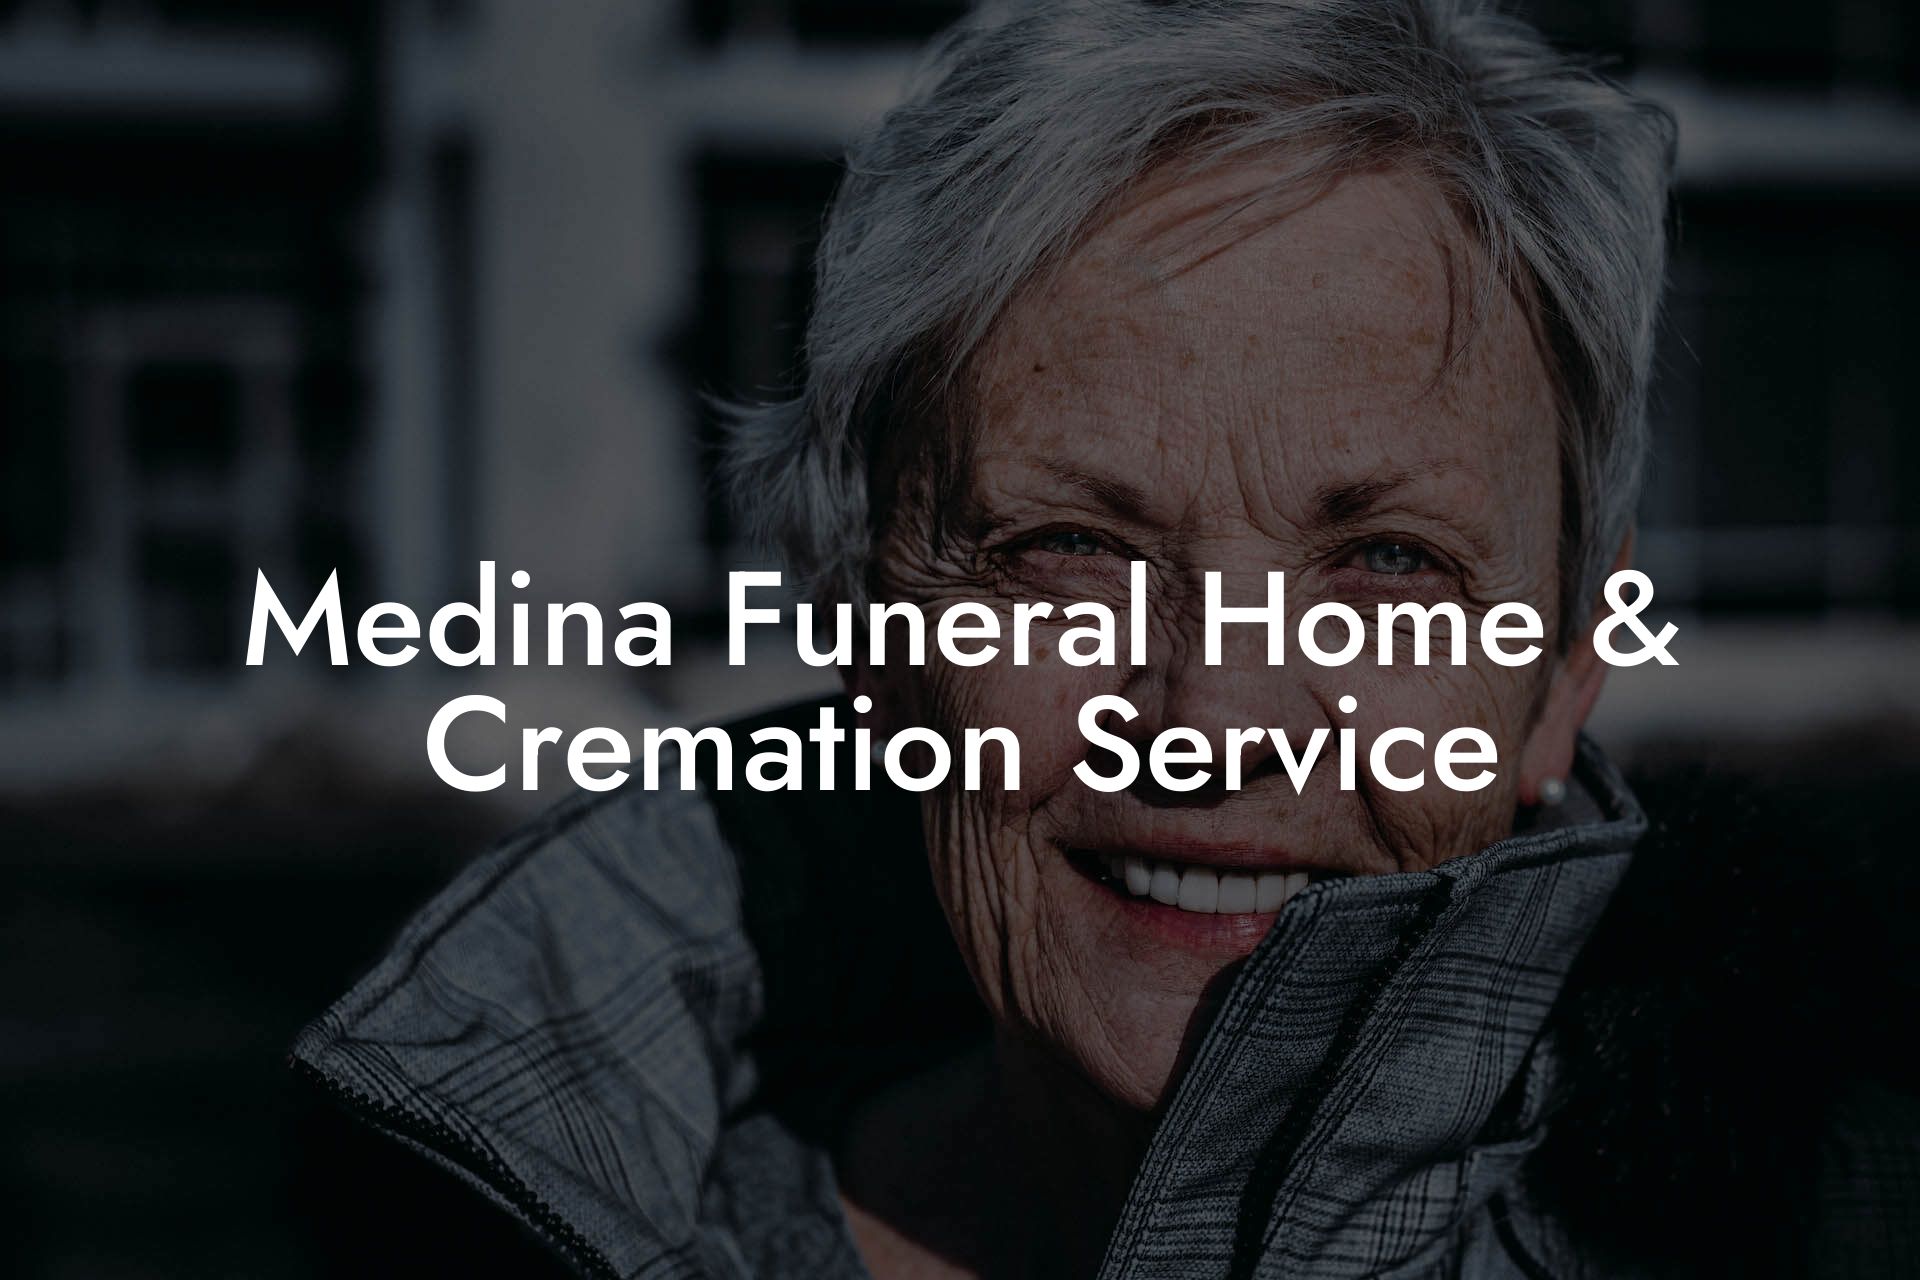 Medina Funeral Home & Cremation Service